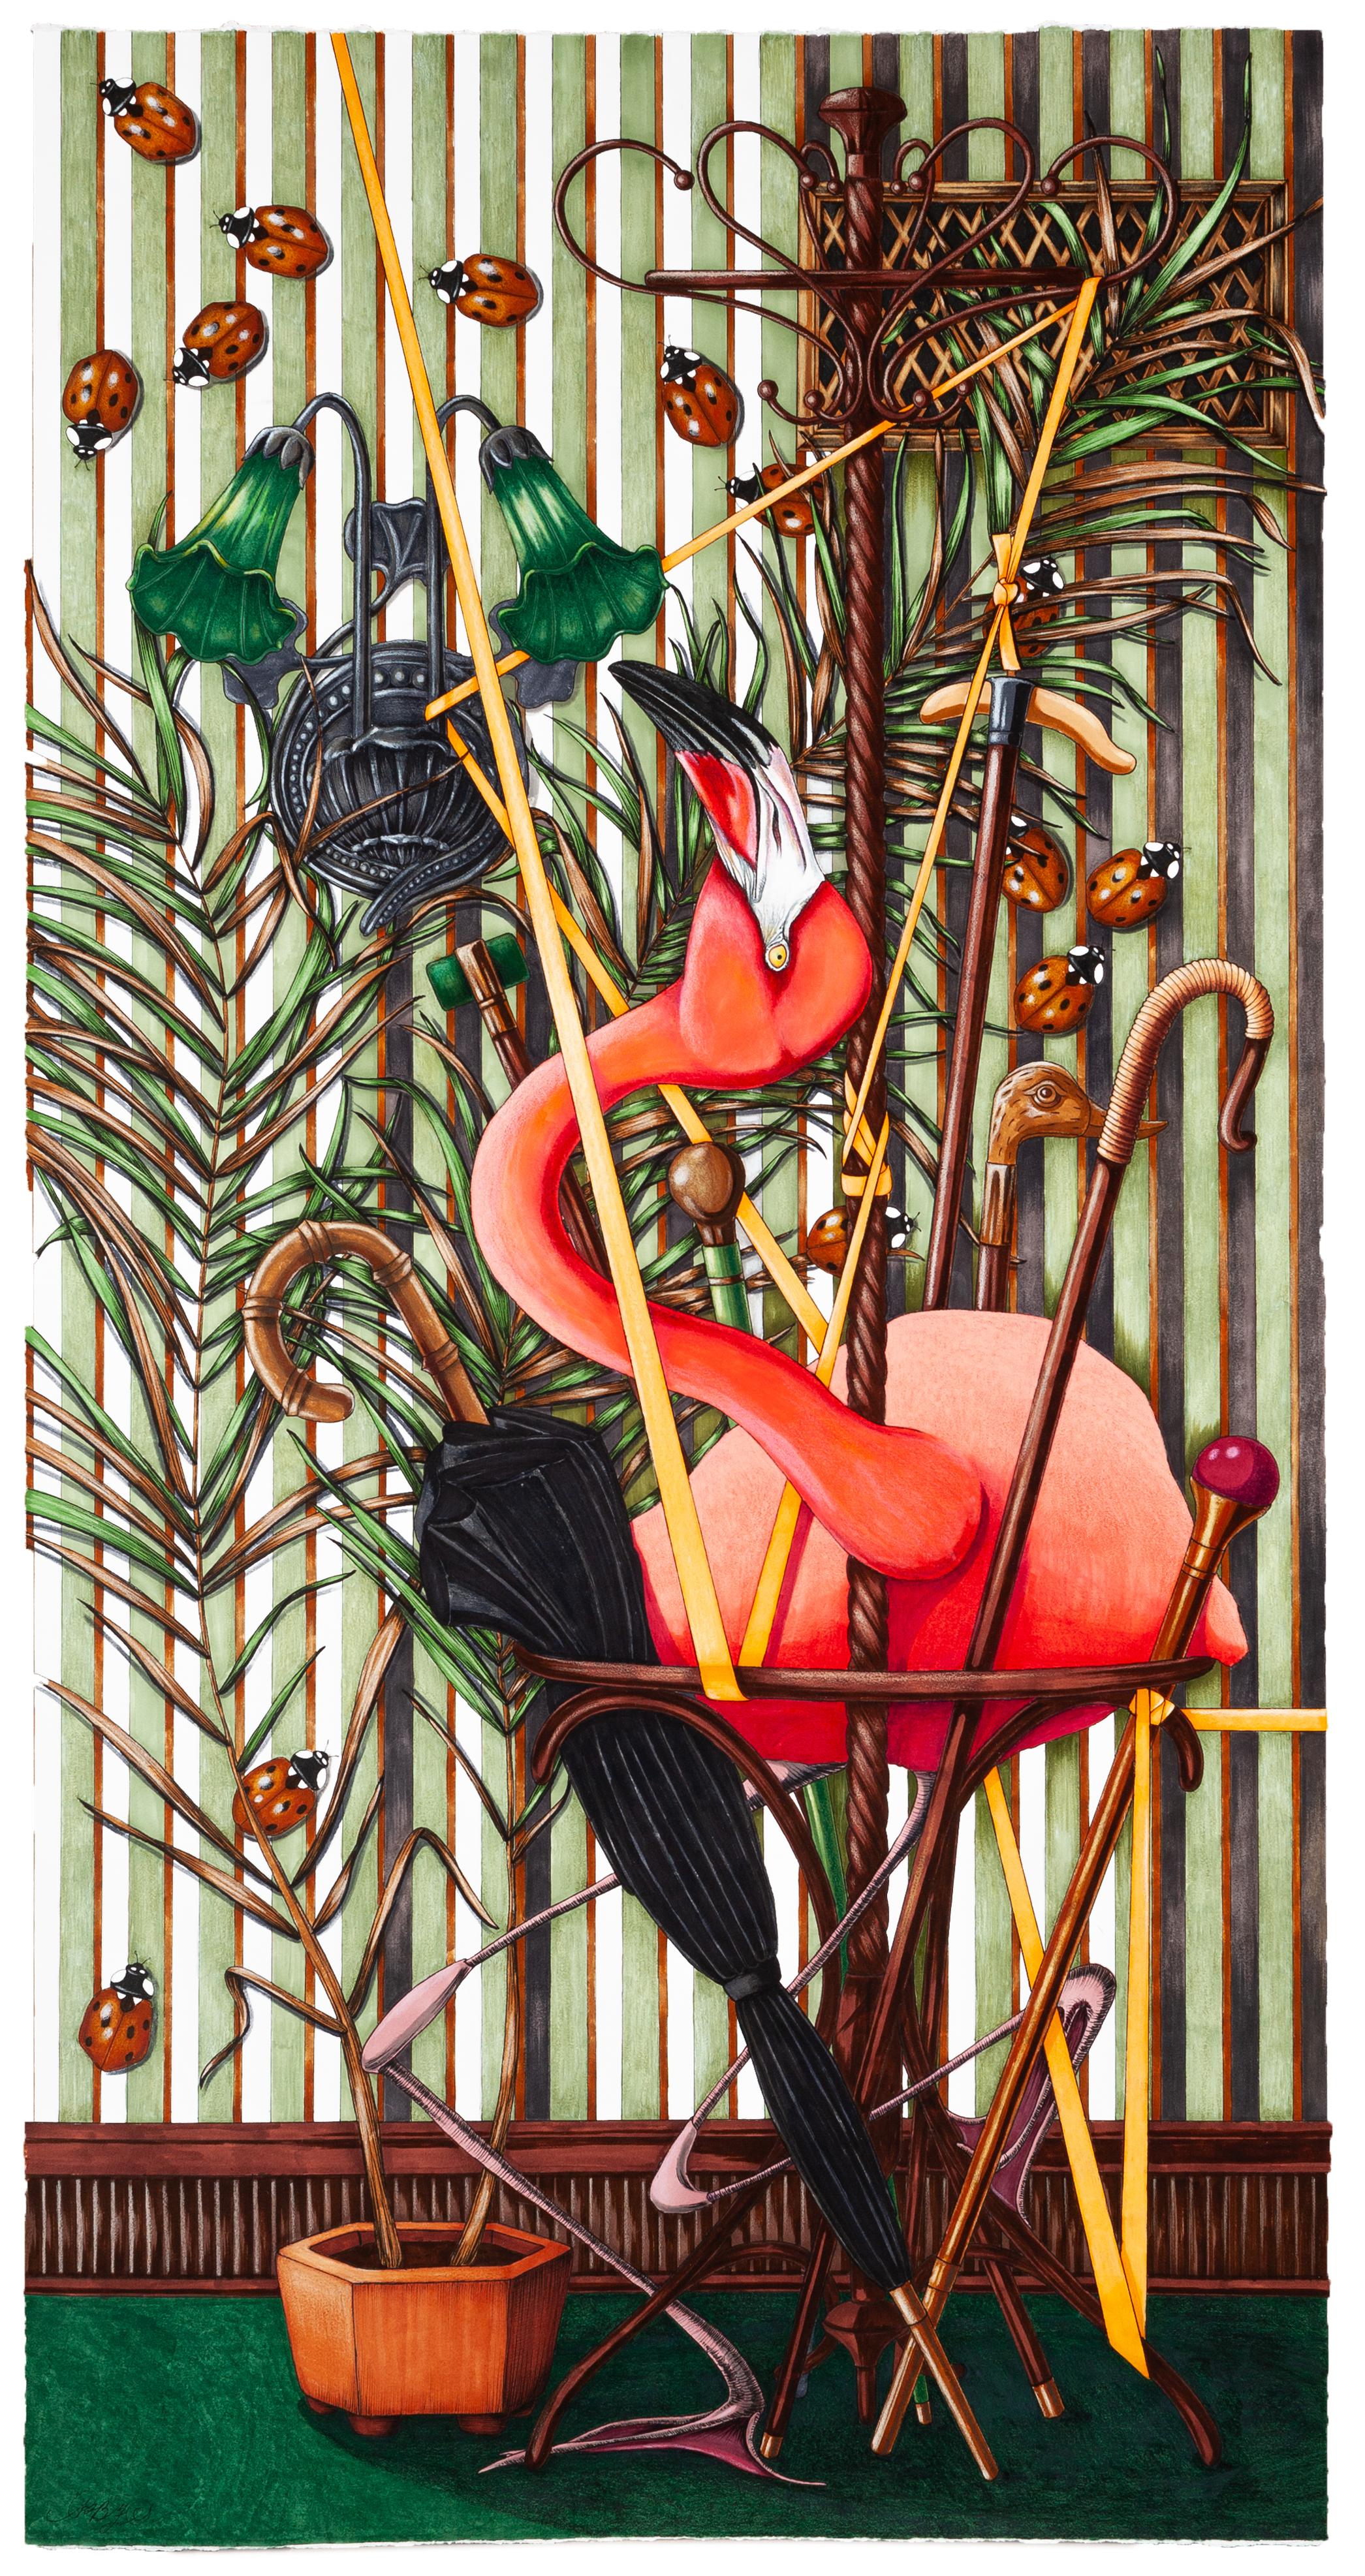 Animal Painting Ashlee Selburg - Porte-parapluie